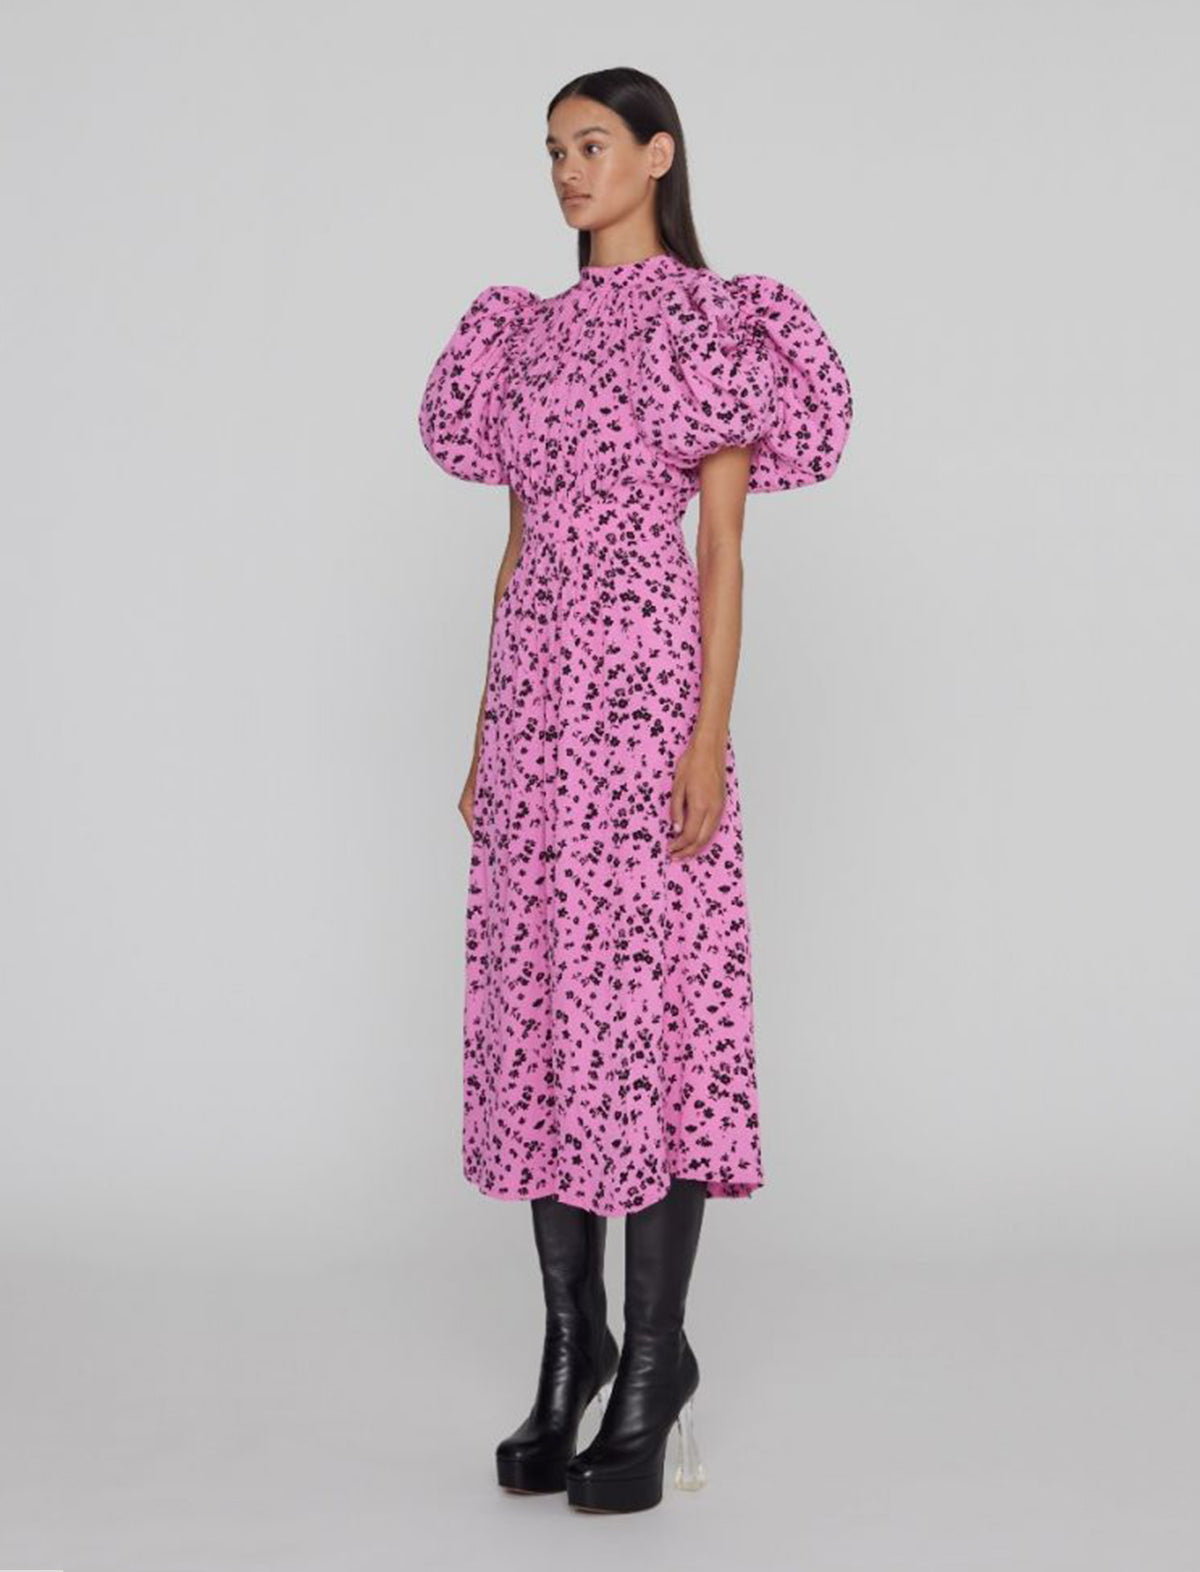 ROTATE Birger Christensen Fine Jacquard Puffy Dress in Super Pink Comb